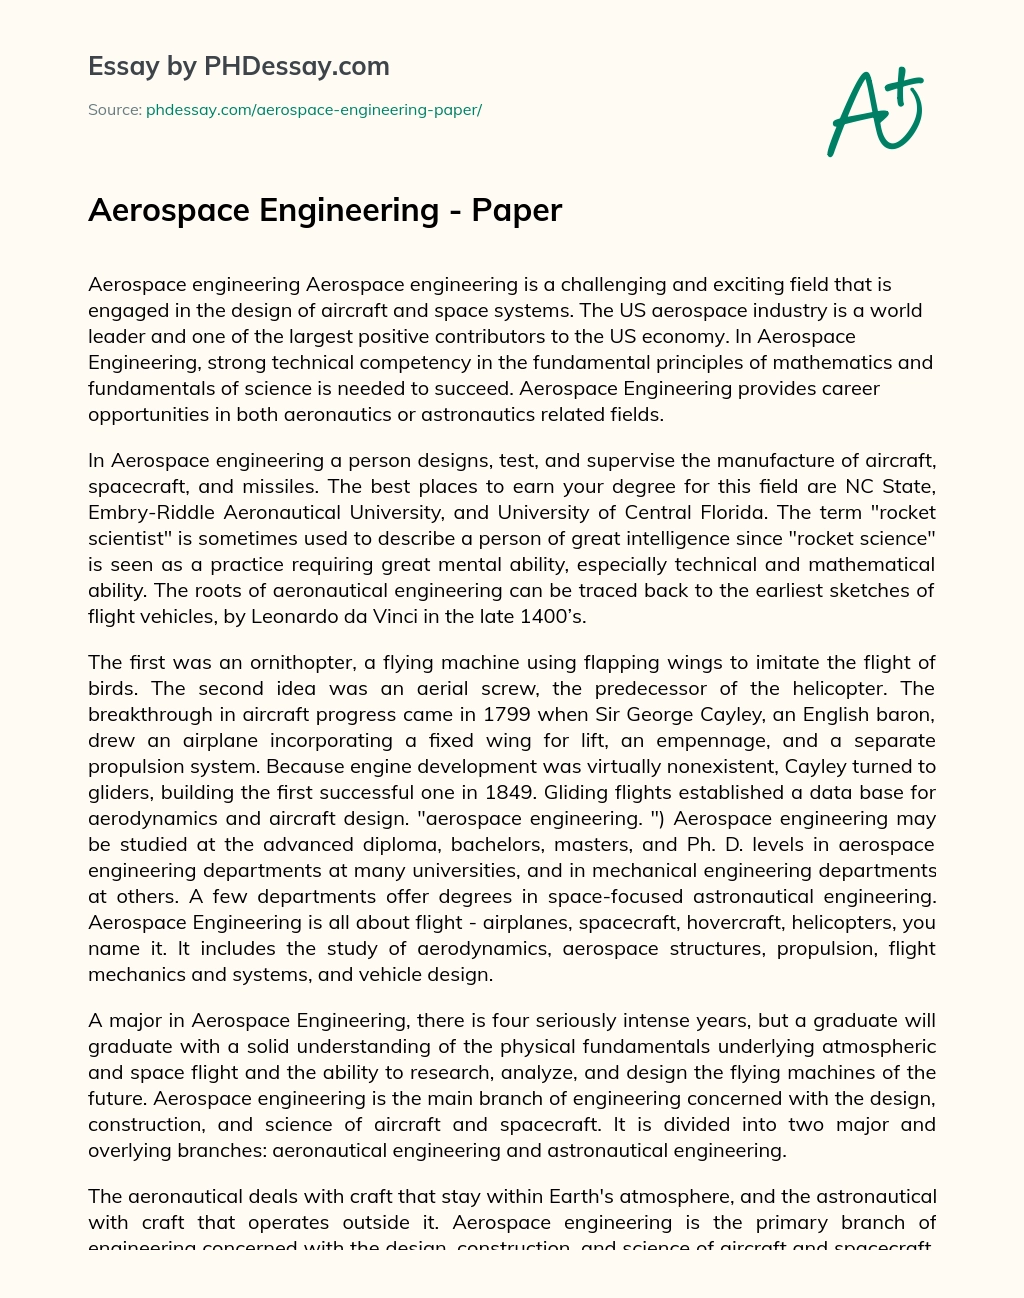 Aerospace Engineering – Paper essay